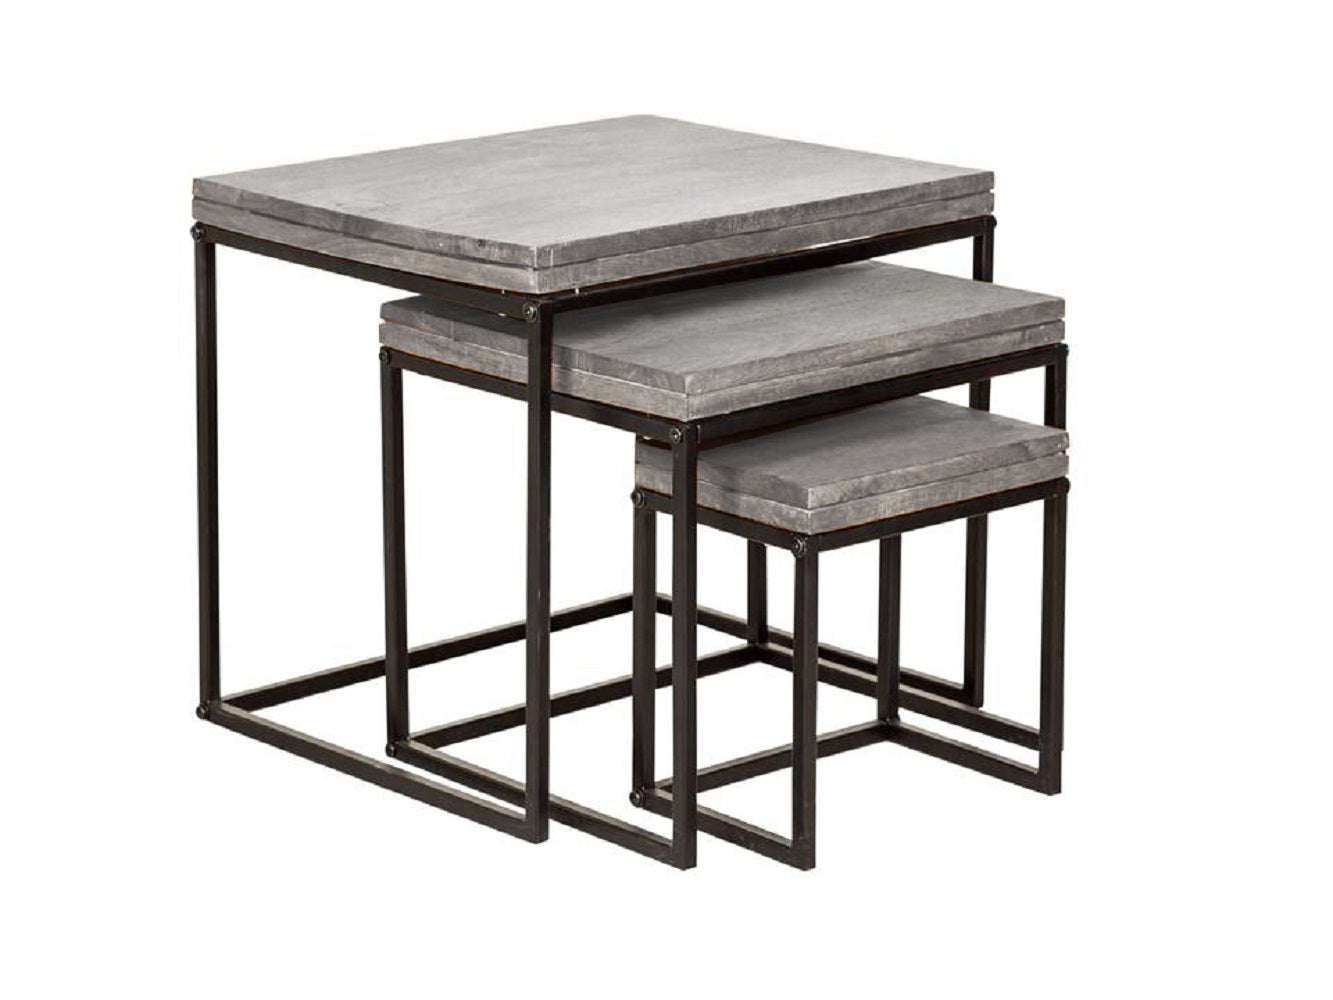 Albany Bed Side Table - metallikafurniture.com